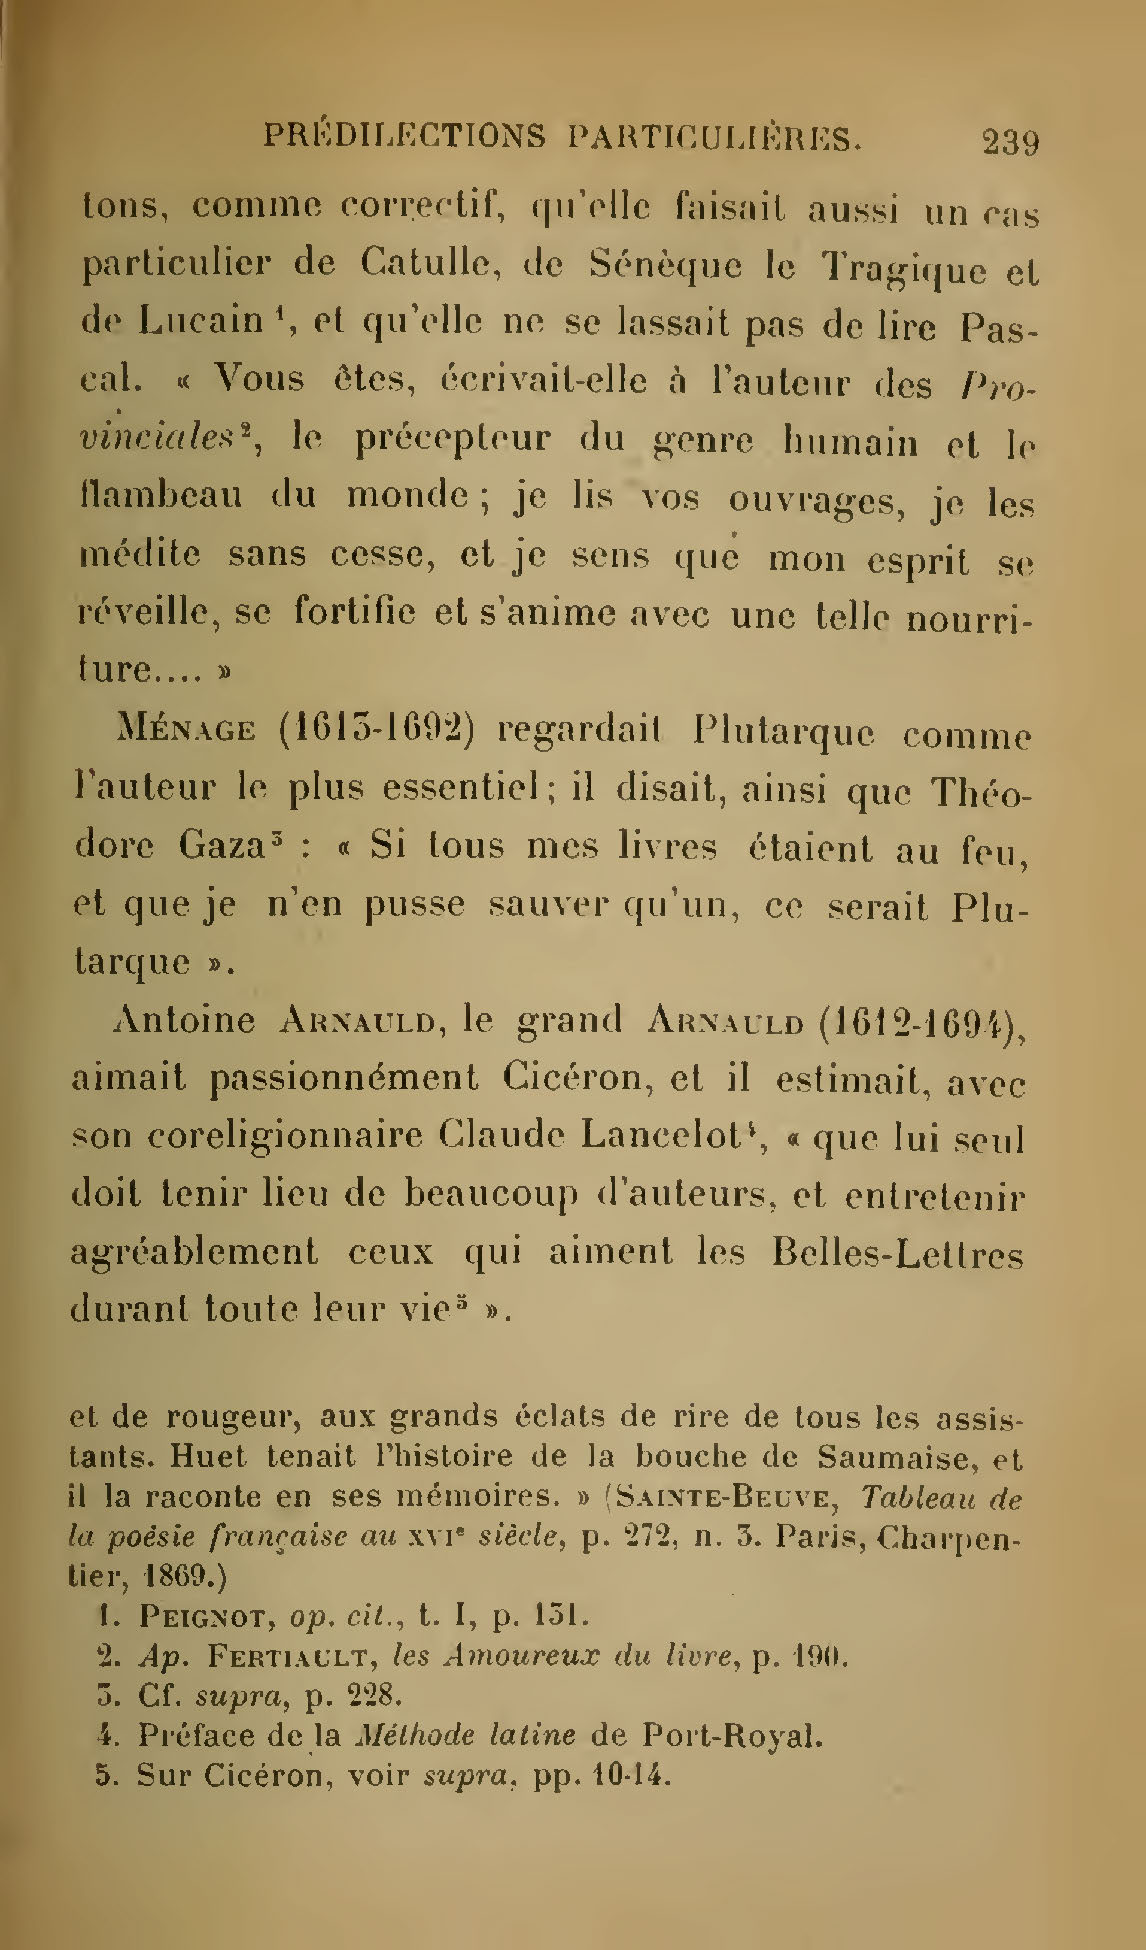 Albert Cim, Le Livre, t. I, p. 239.